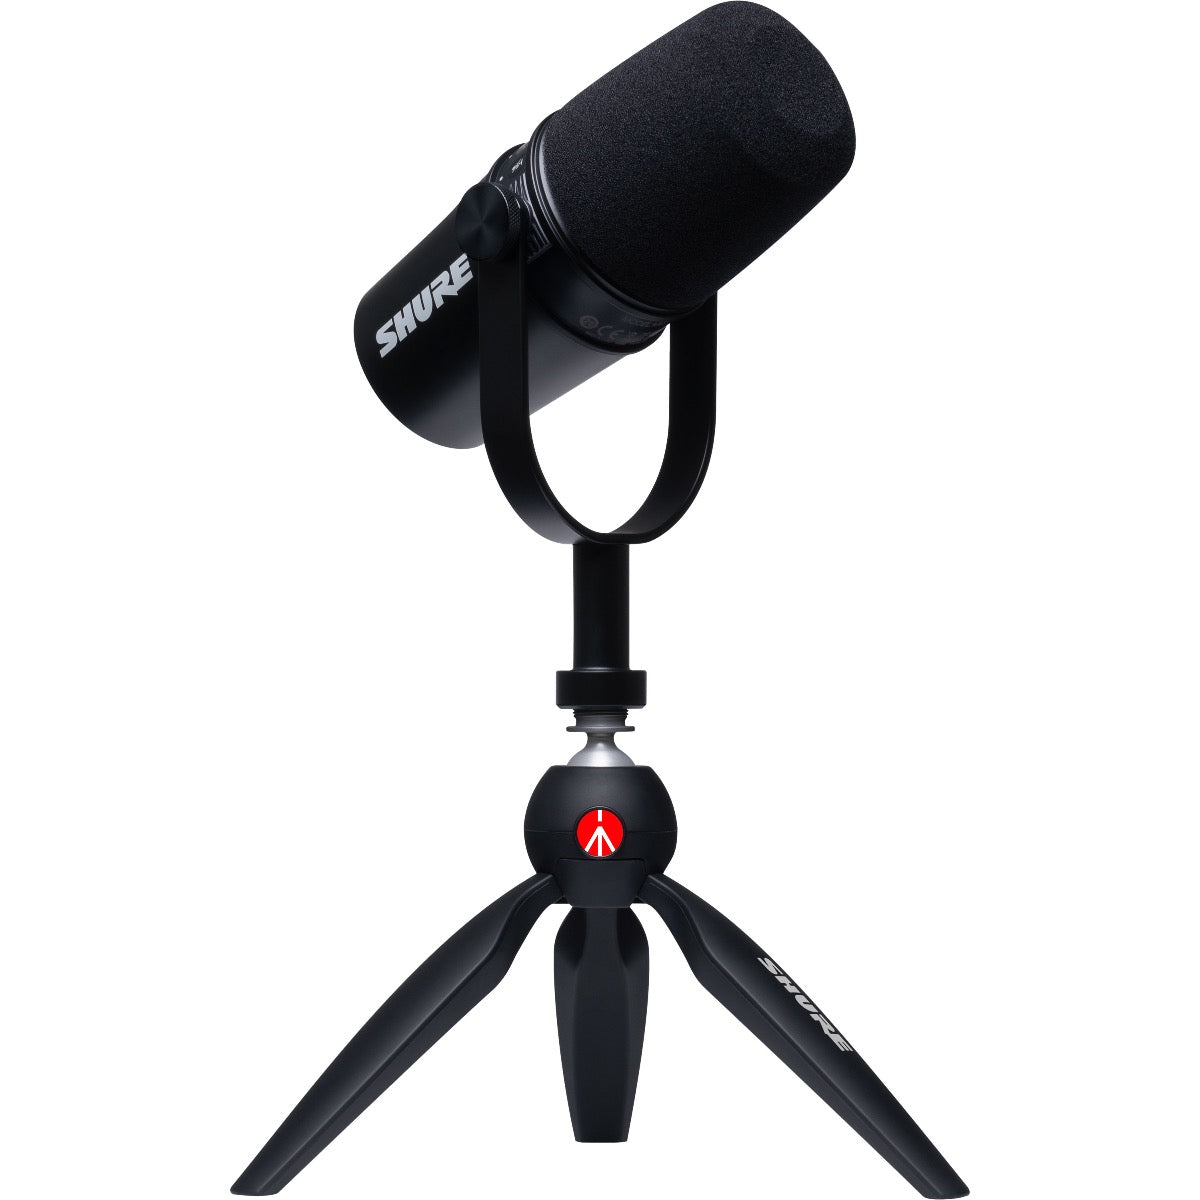 Shure MV7 USB/XLR Podcast Microphone, Black